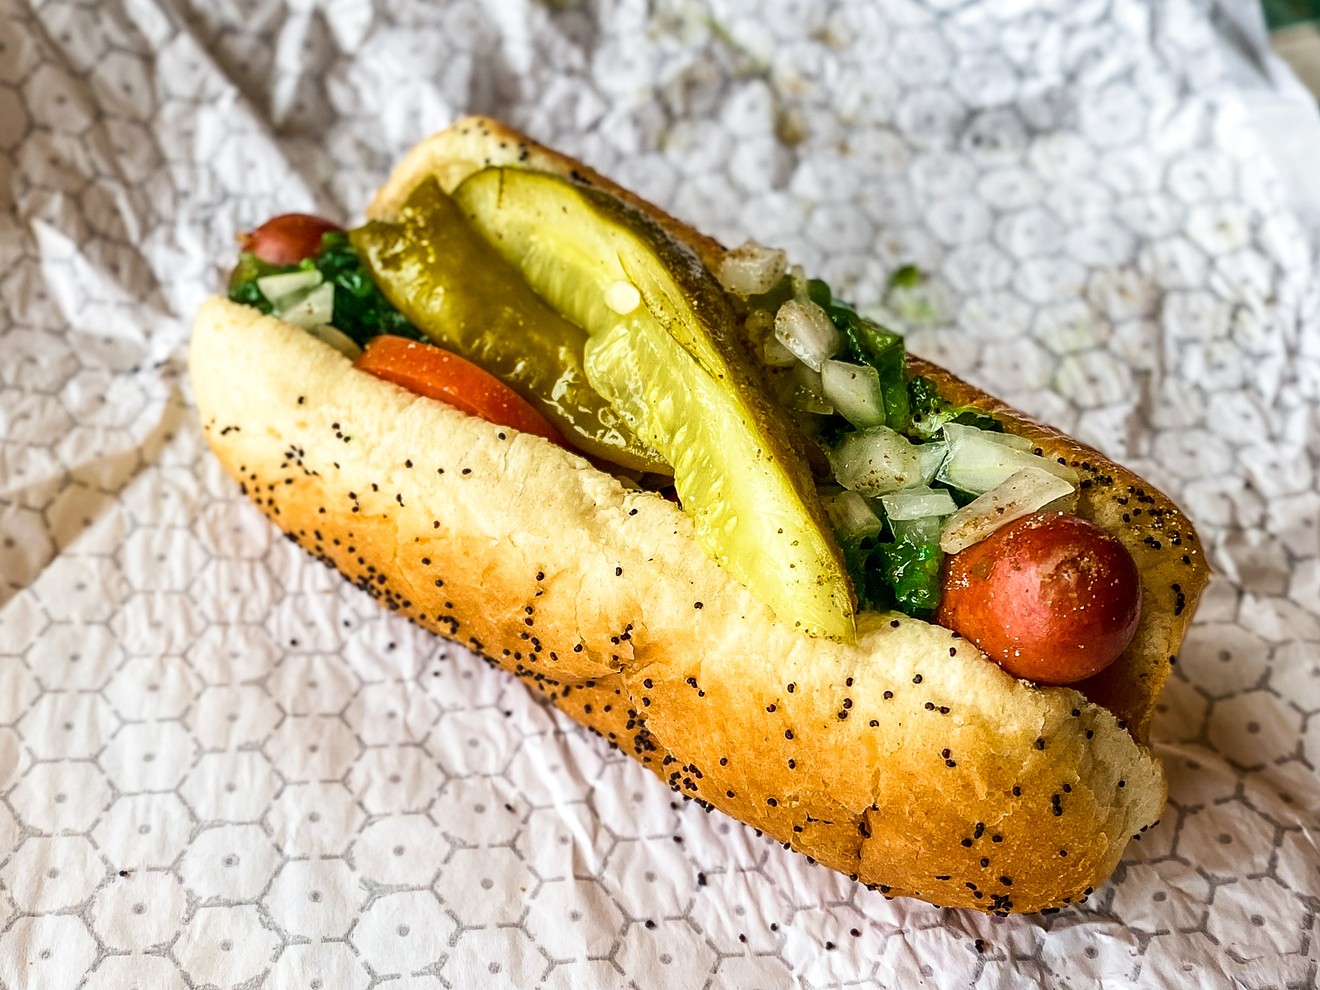 Chicago Avenue's hot dog